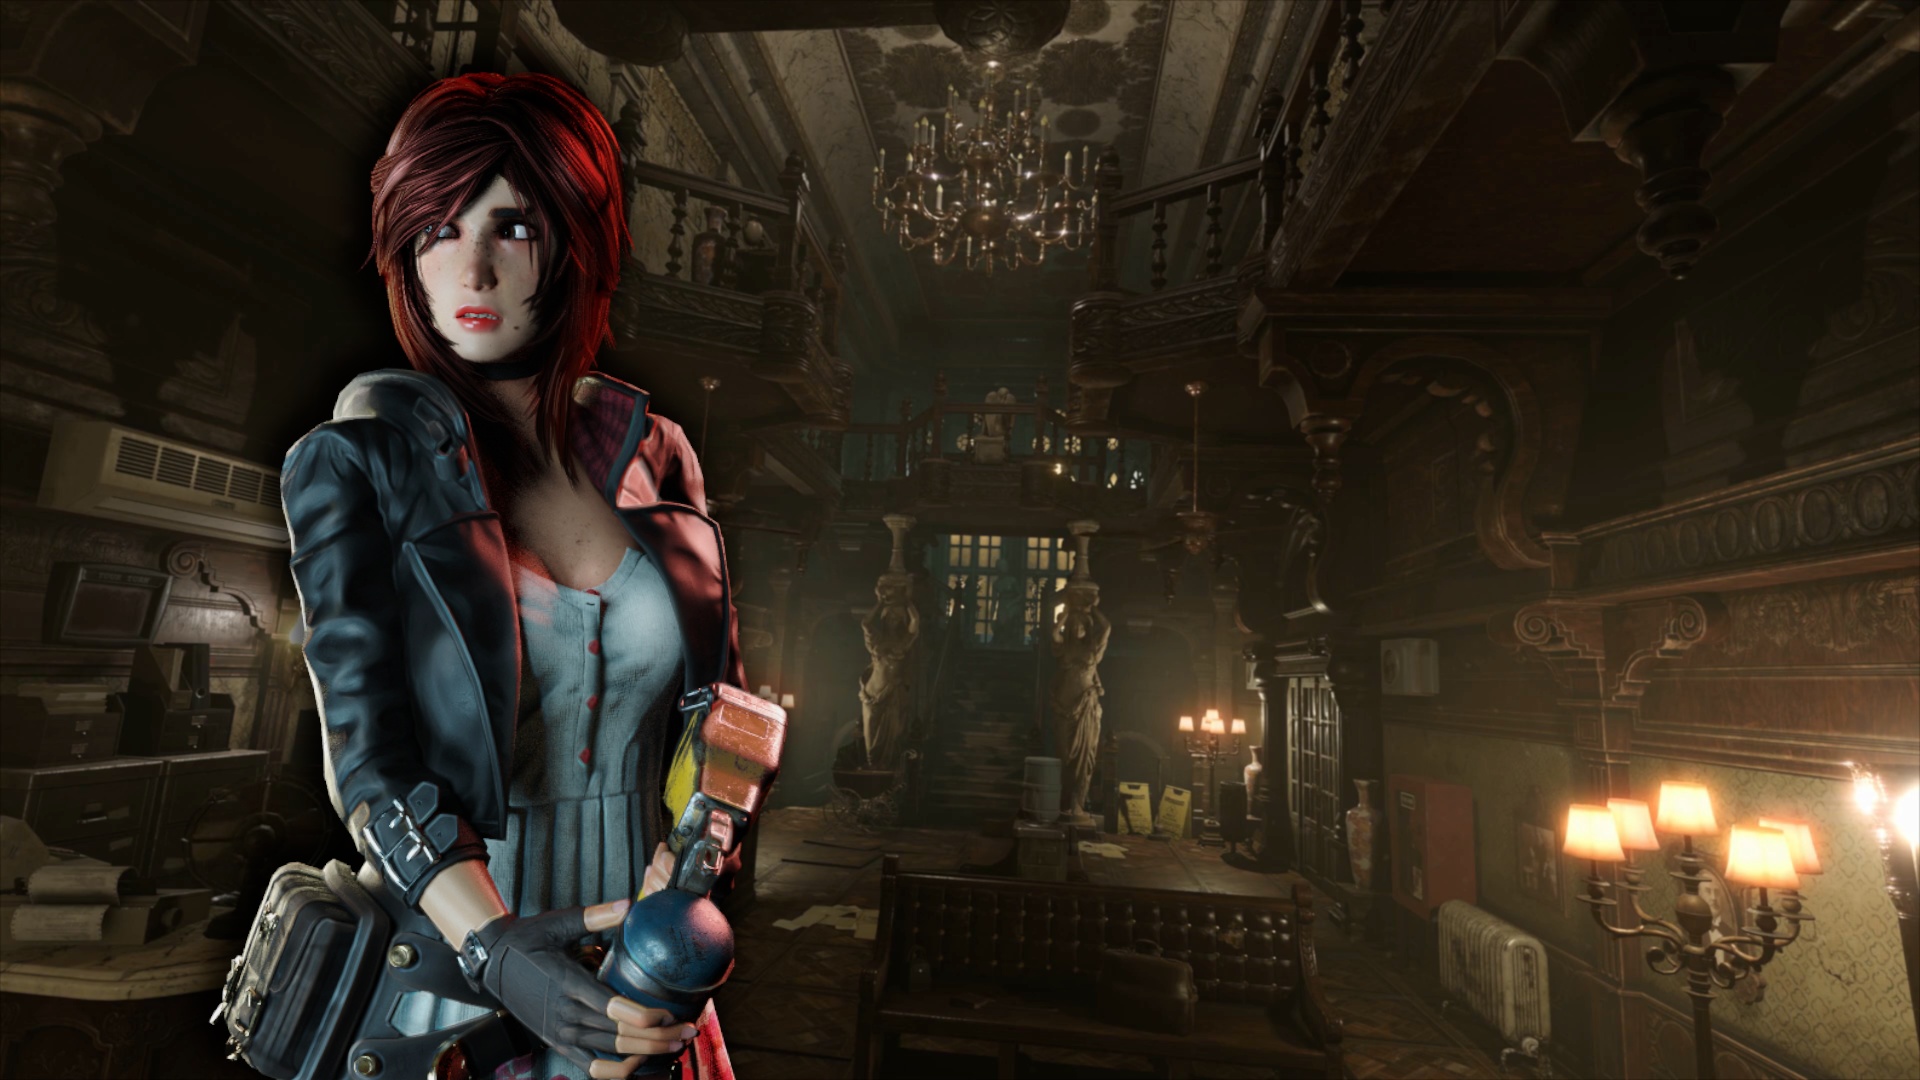 #Resident-Evil-Rivale mit 93 Prozent positiven Reviews auf Steam enthüllt einen Nachfolger